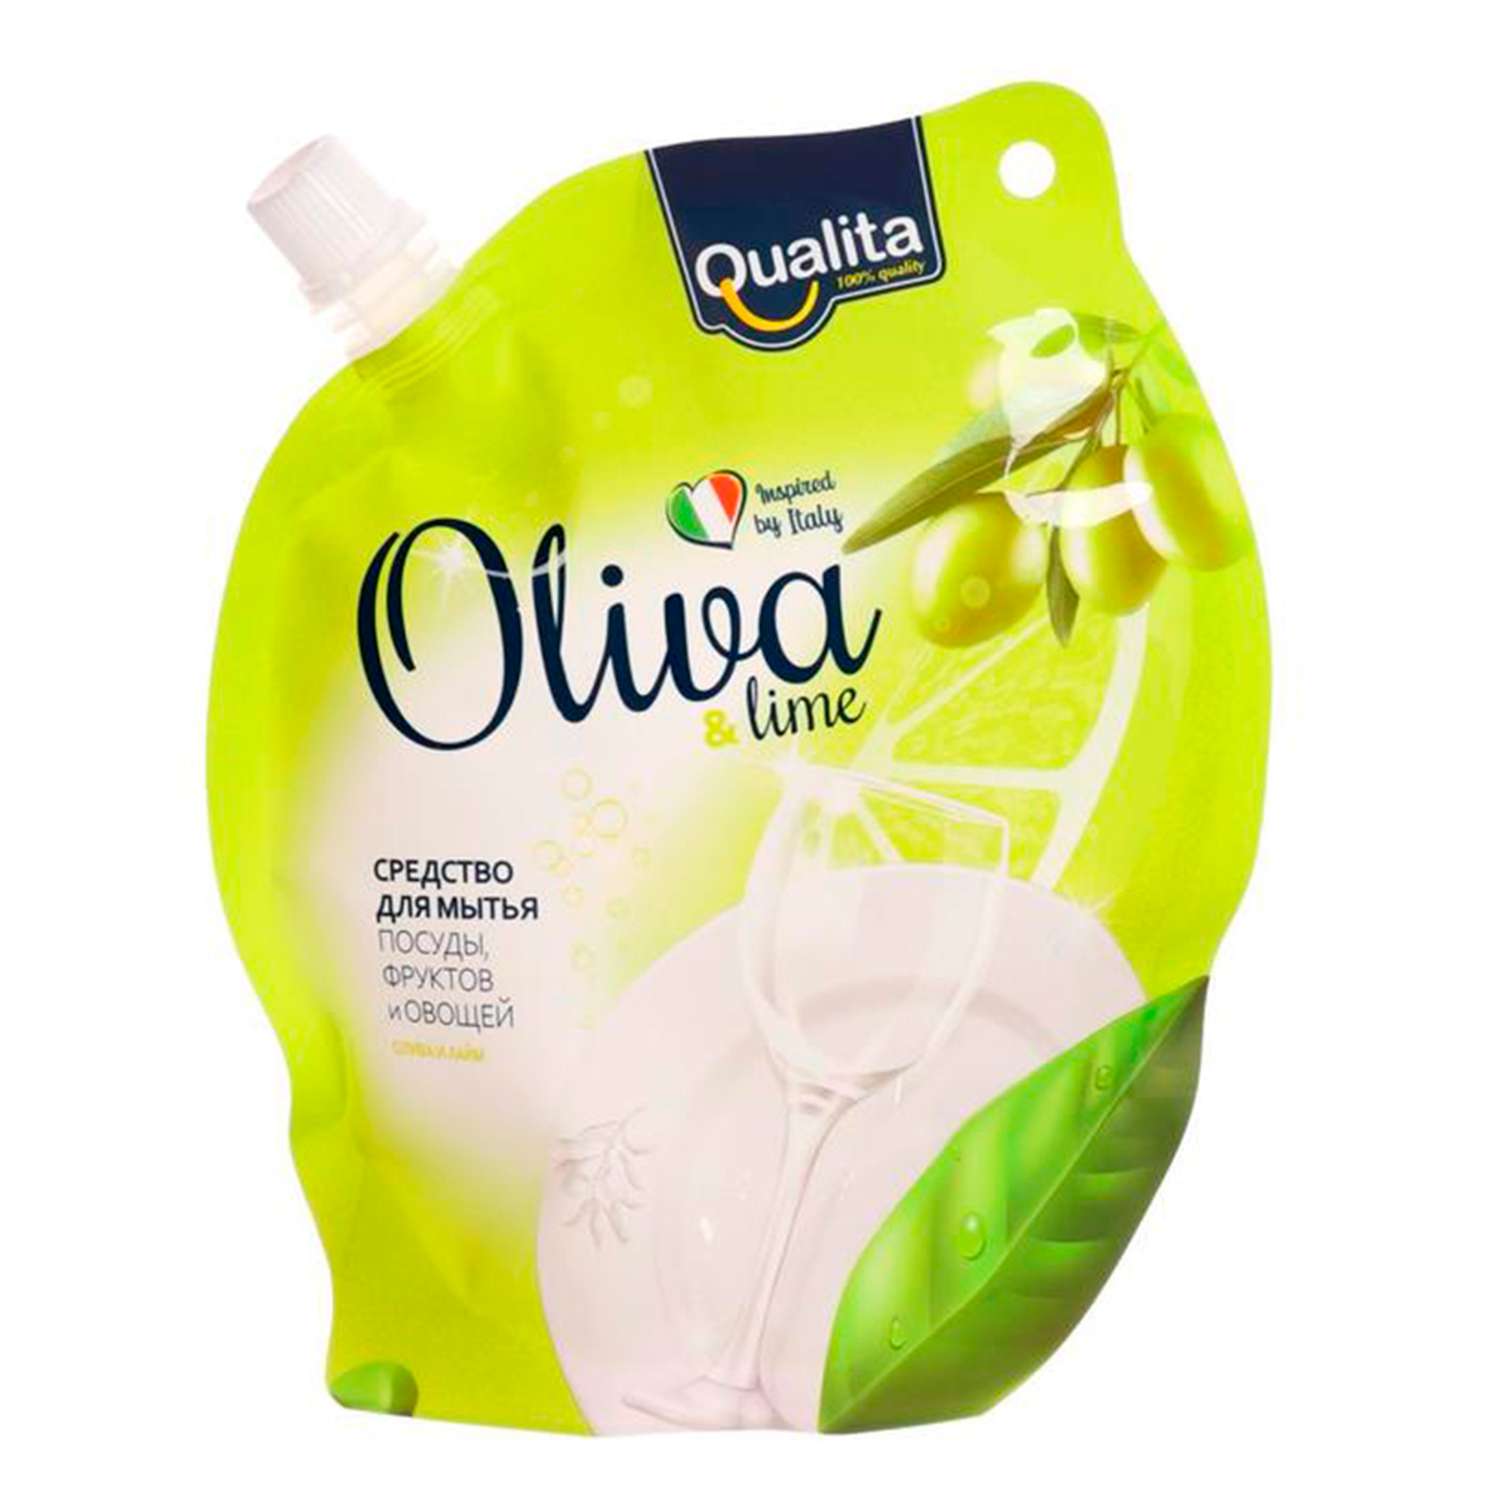 Средство для мытья посуды QUALITA Oliva and lime 450мл - фото 1